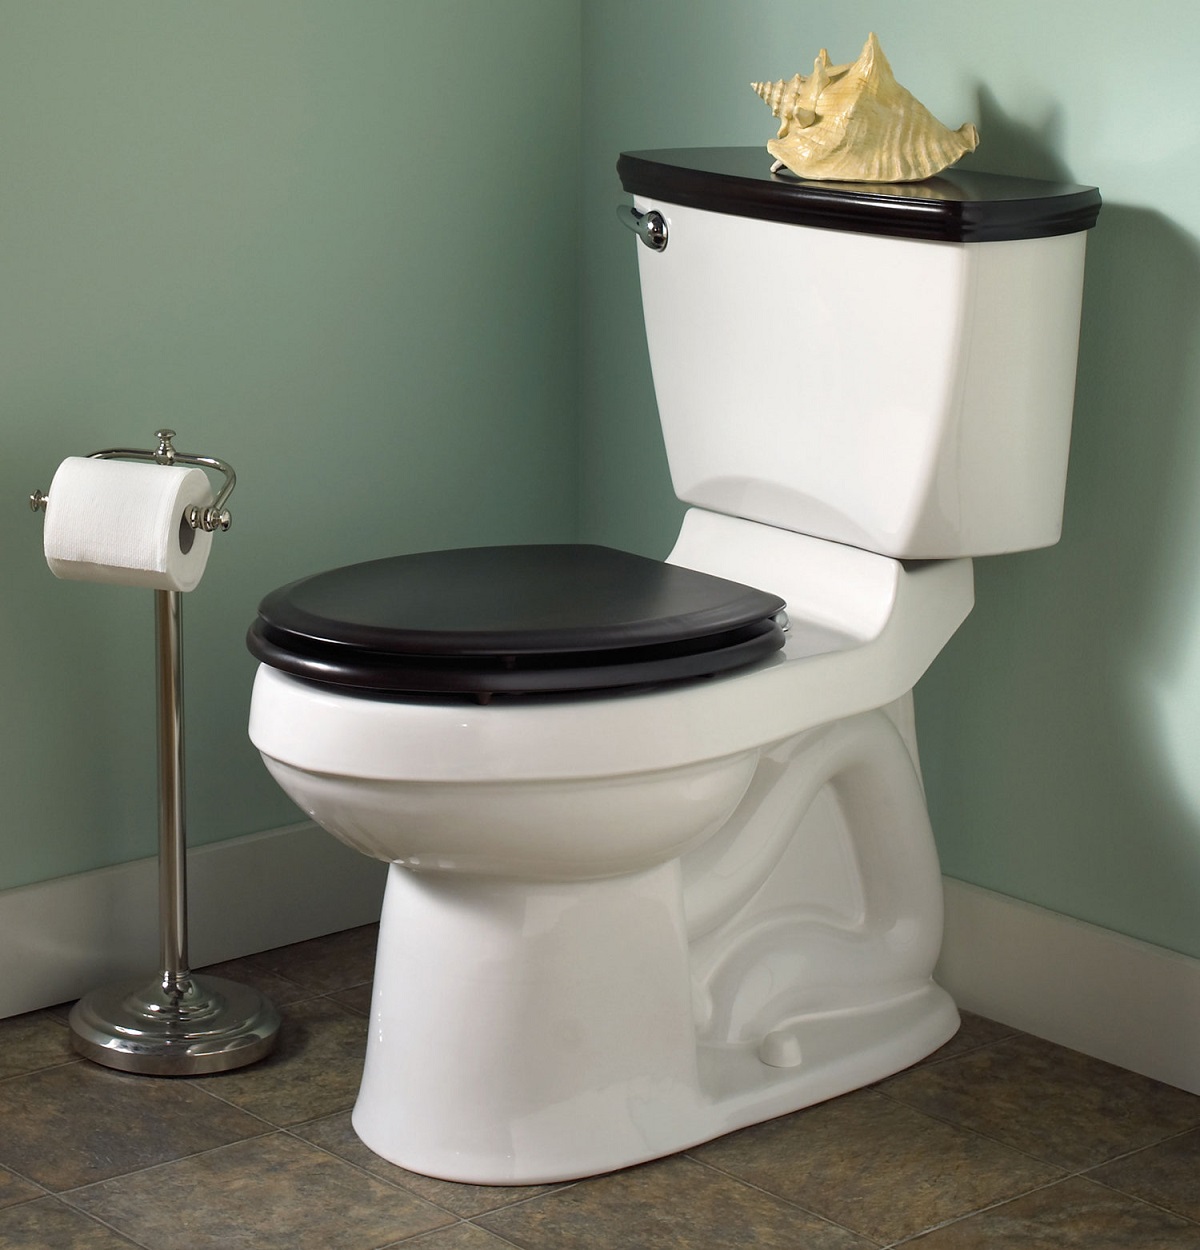 How To Buy Toilet Seat